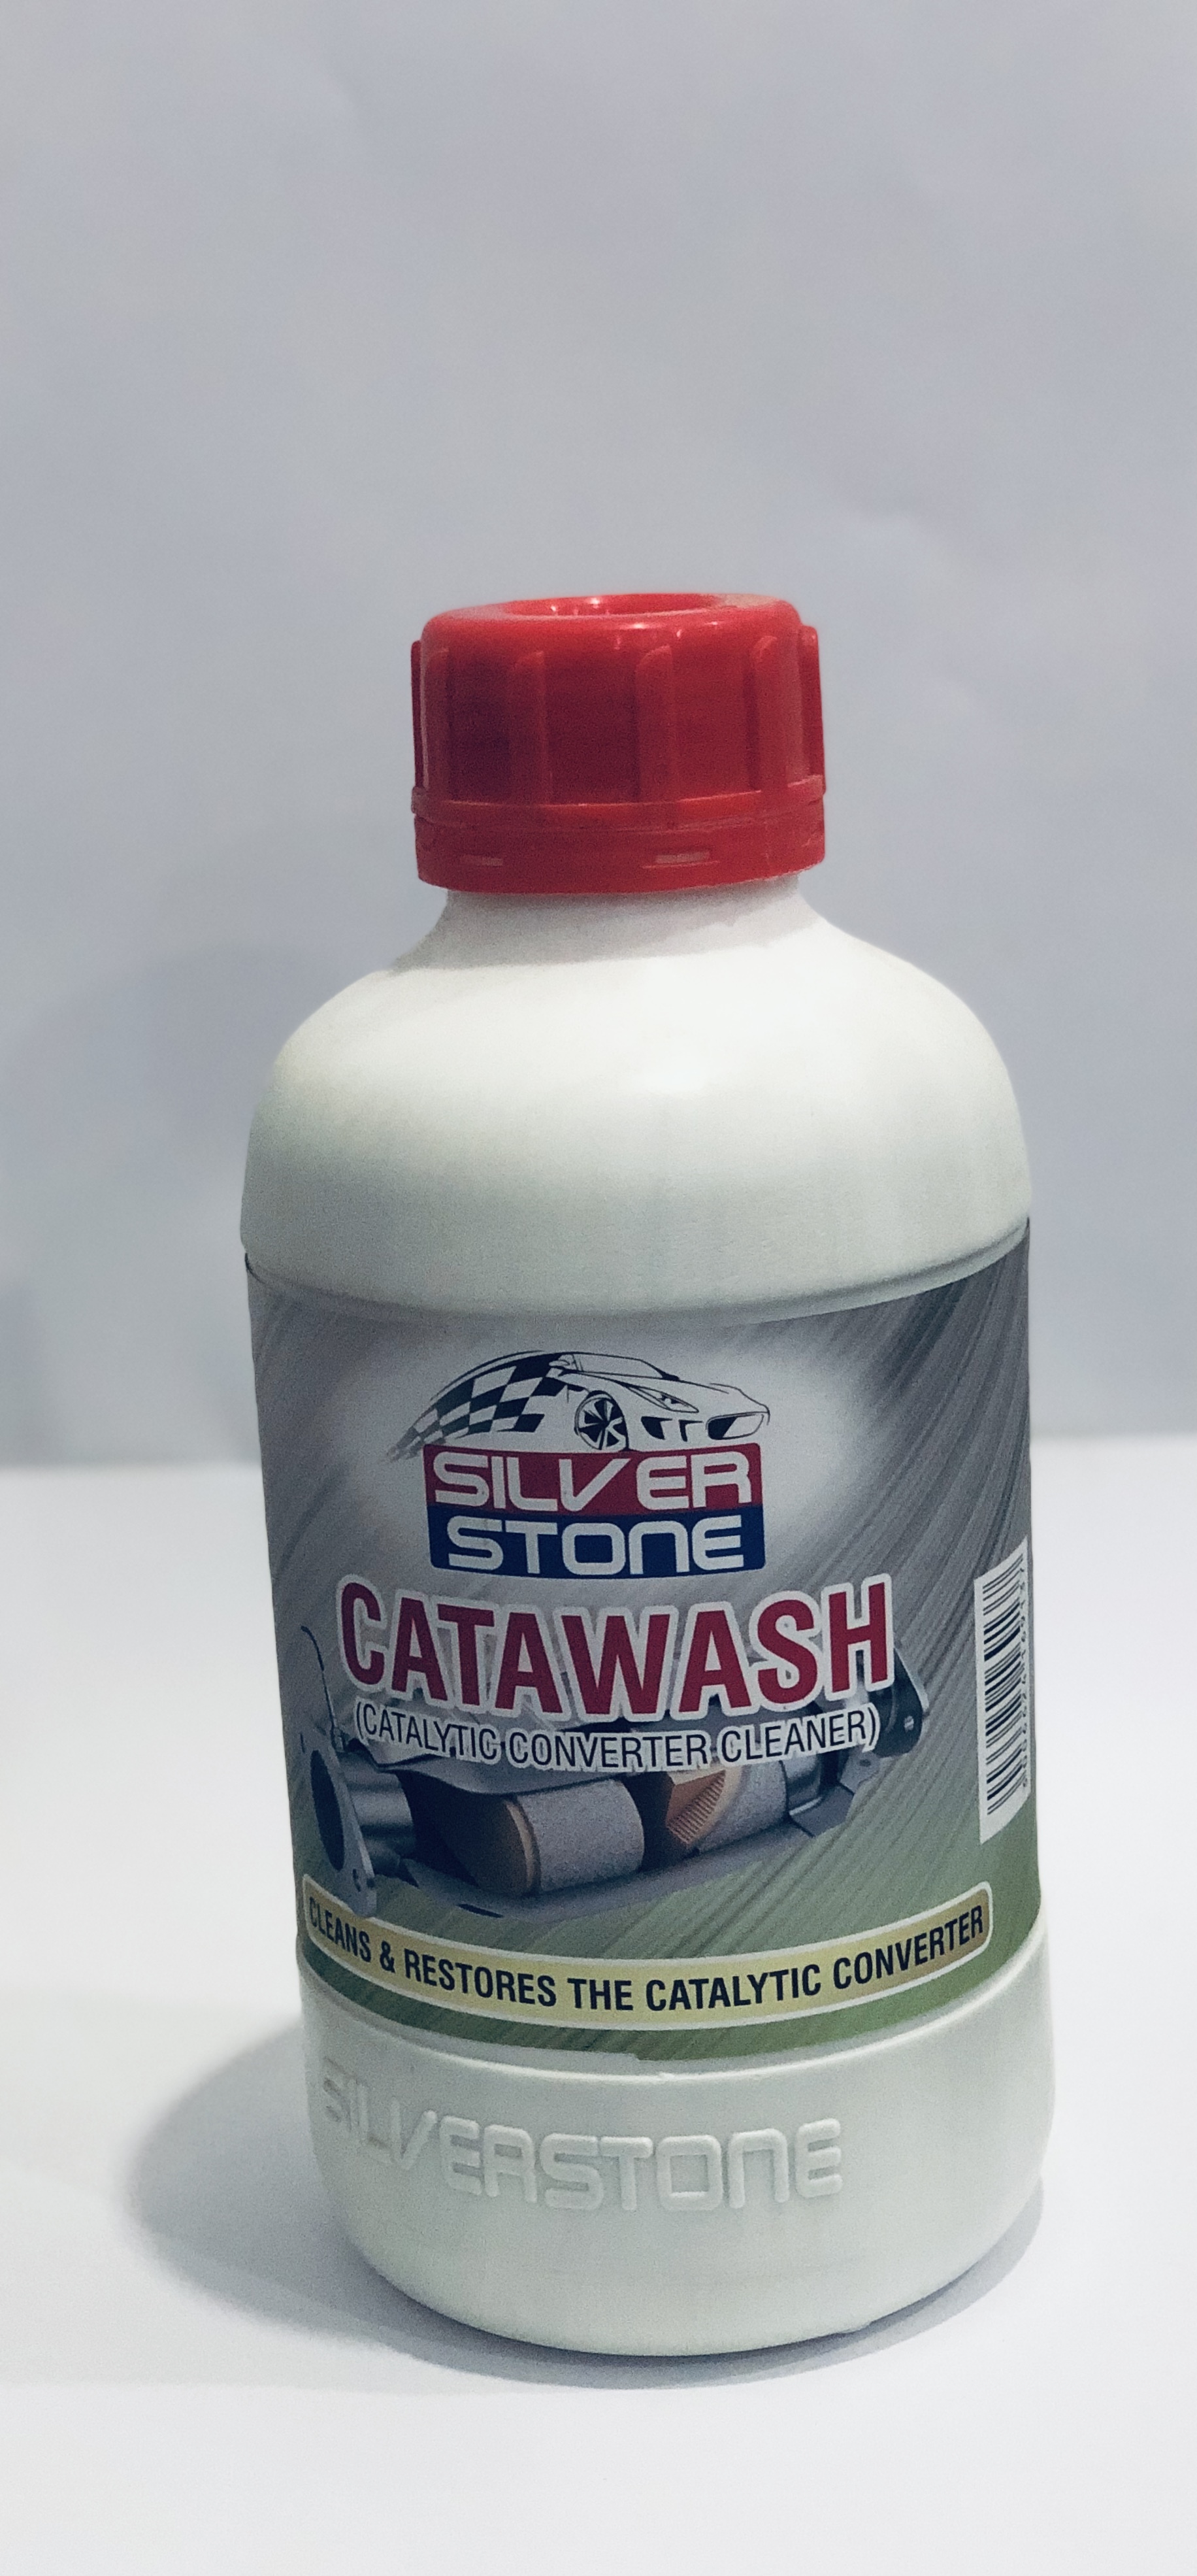 Silver stone Catawash UK Catalytic Converter Cleaner